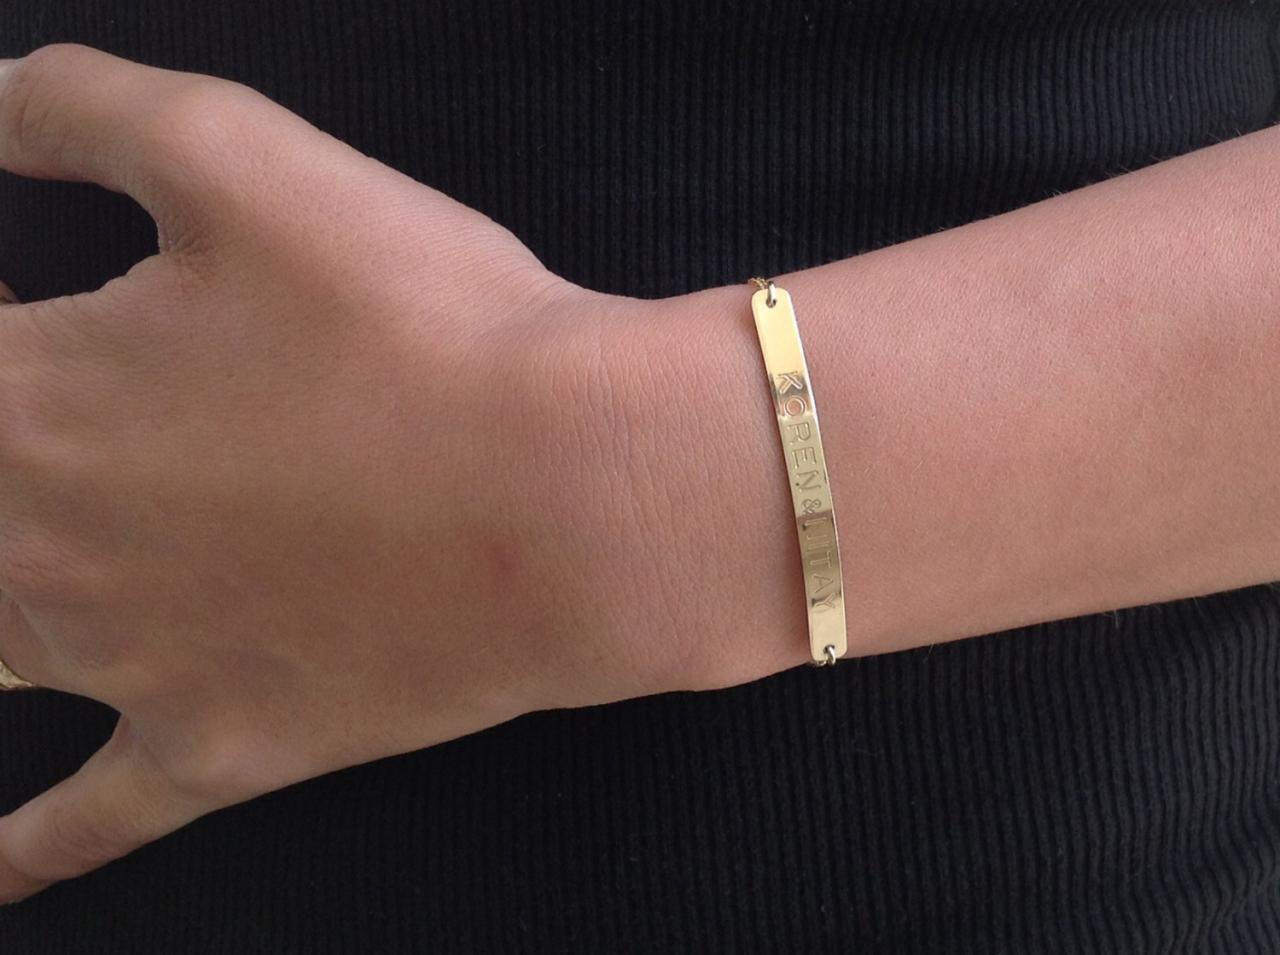 Personalized bracelet, name bracelet, gold bracelet, personalized jewelry, custom bracelet - B017